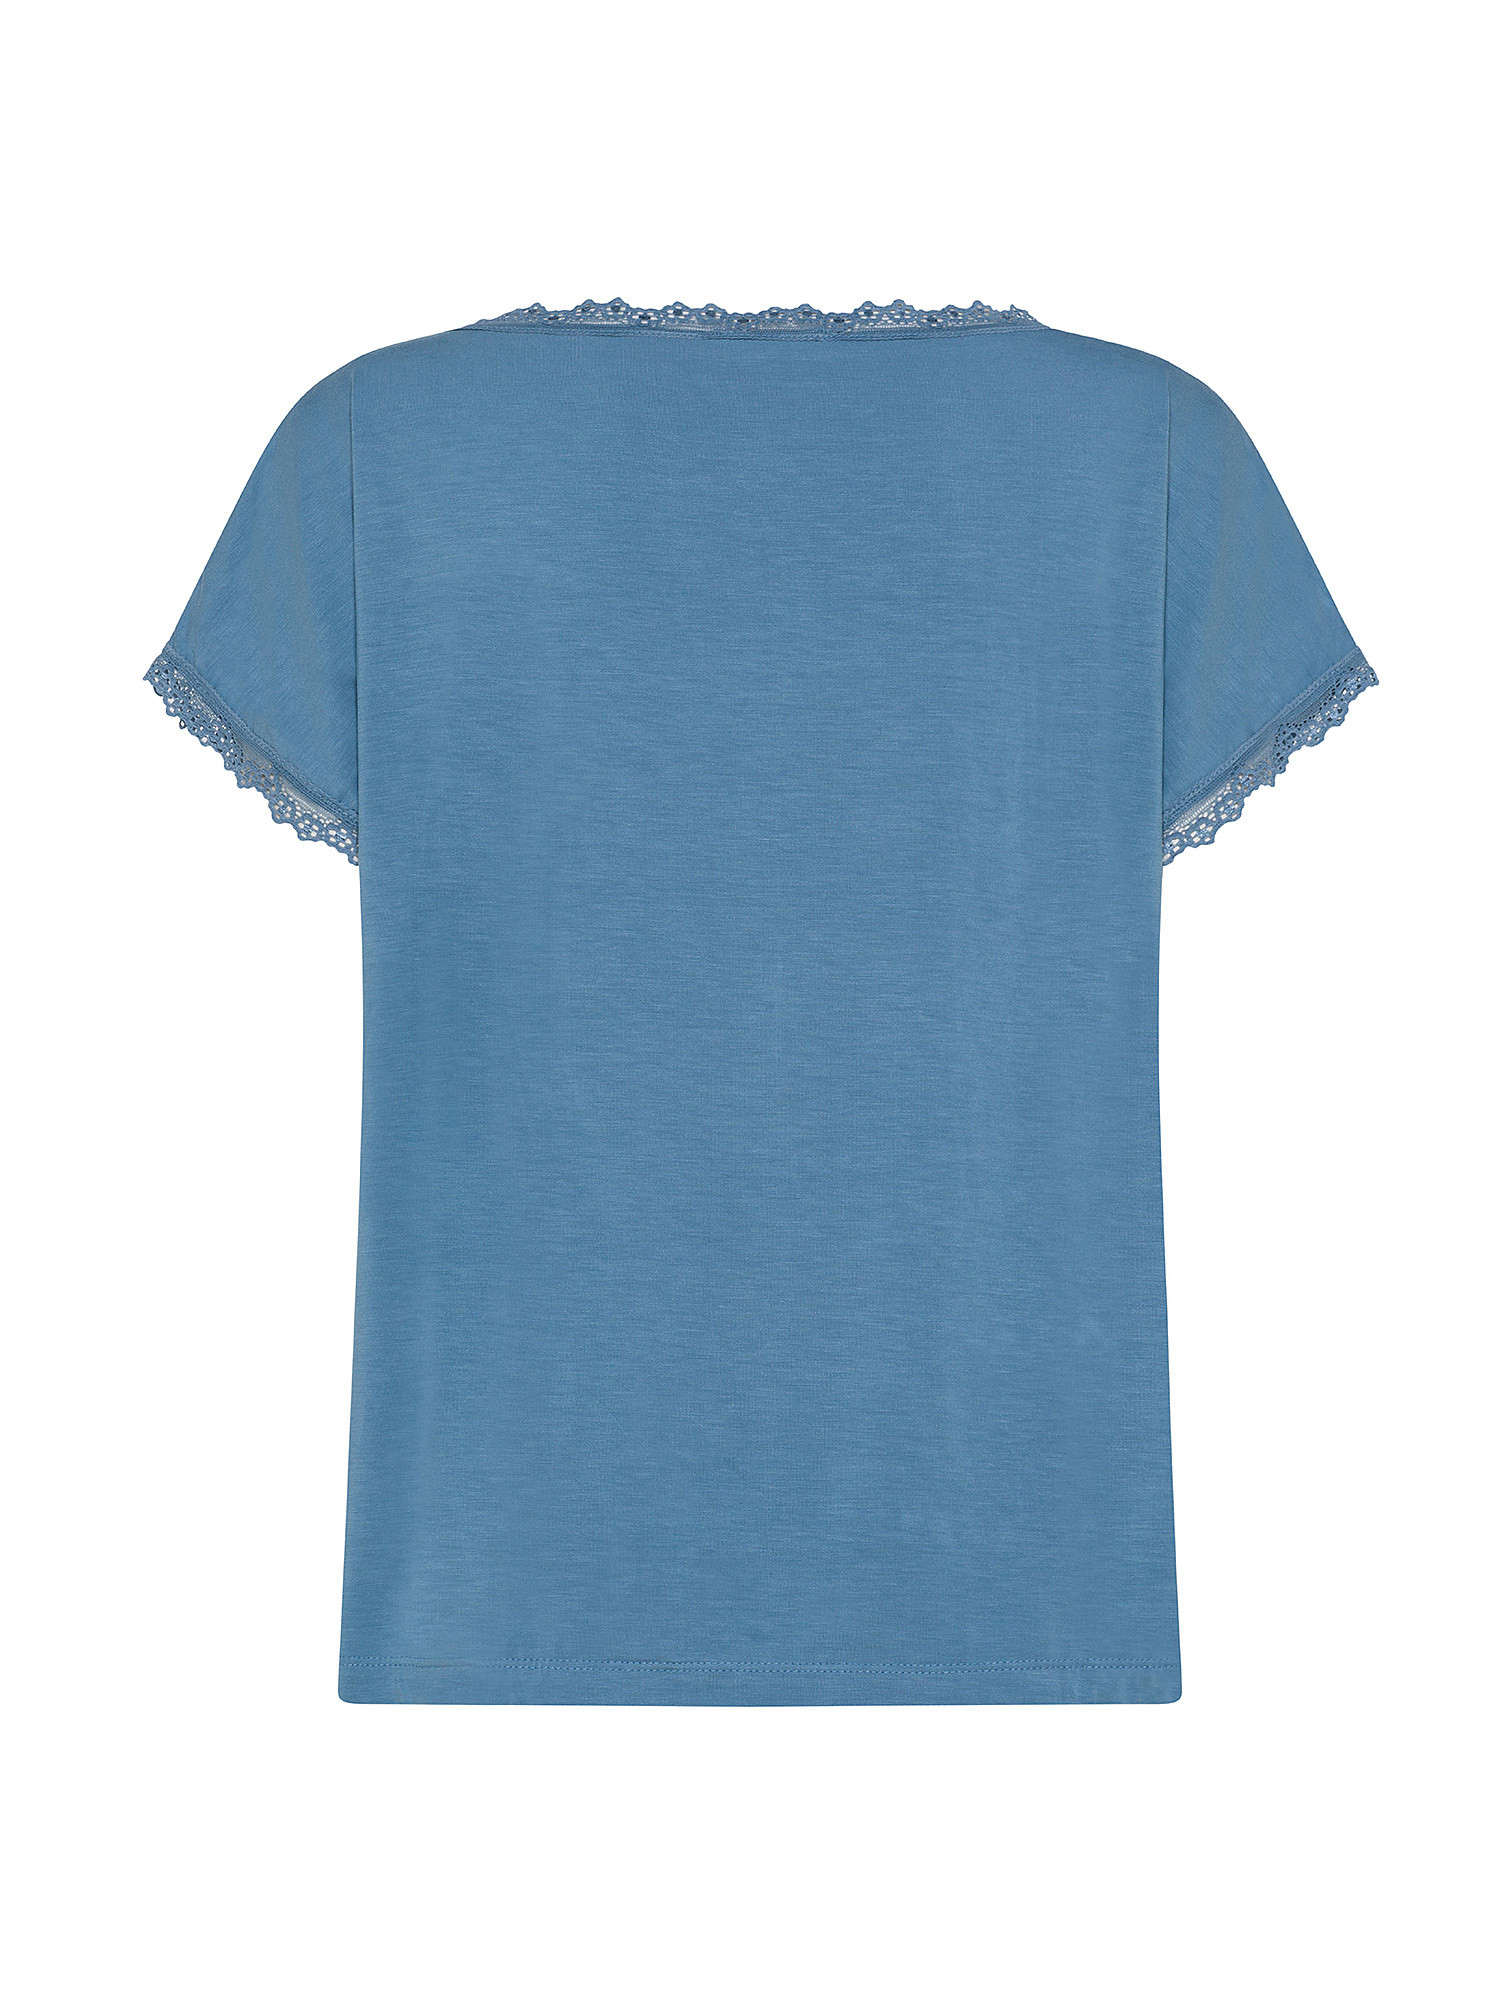 Solid color bamboo viscose T-shirt, Light Blue, large image number 1